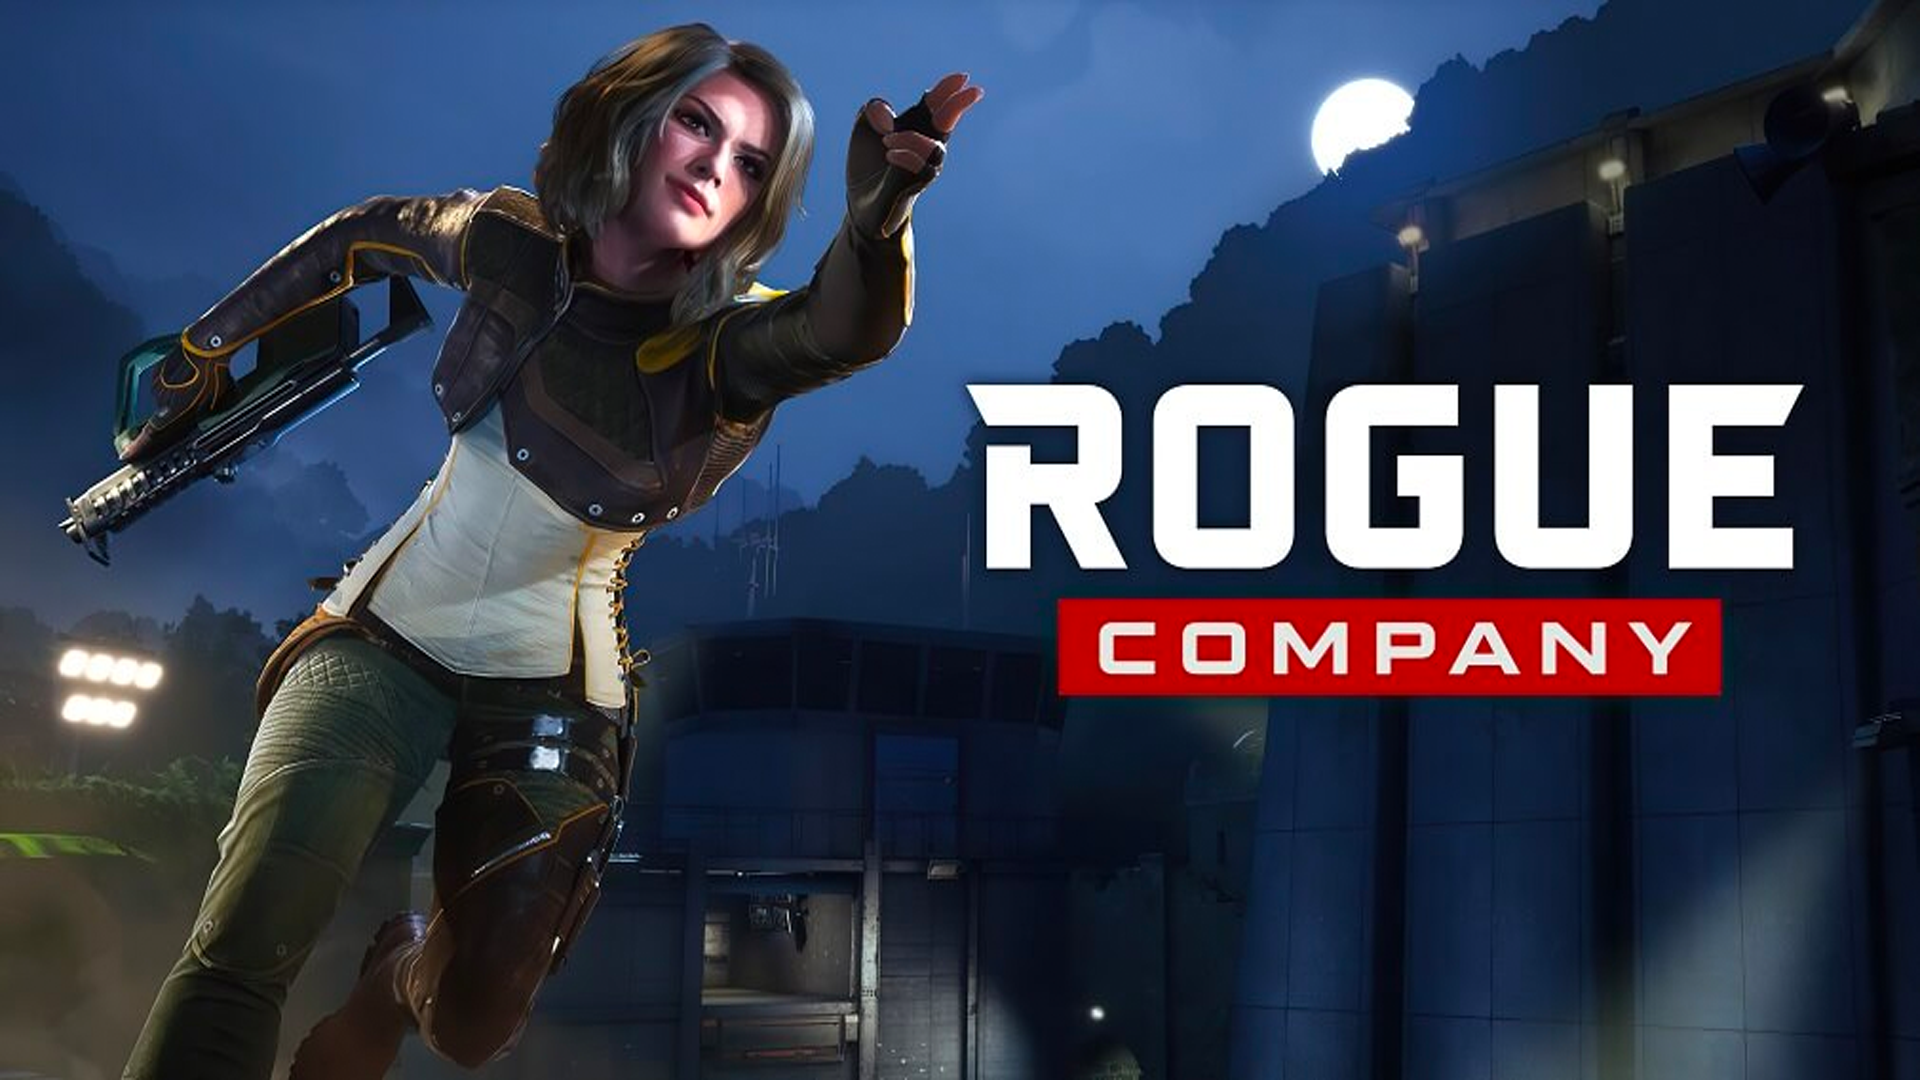 Sneak peak of Rogue Company Mobile gameplay! #mobile #mobilegame #mobi